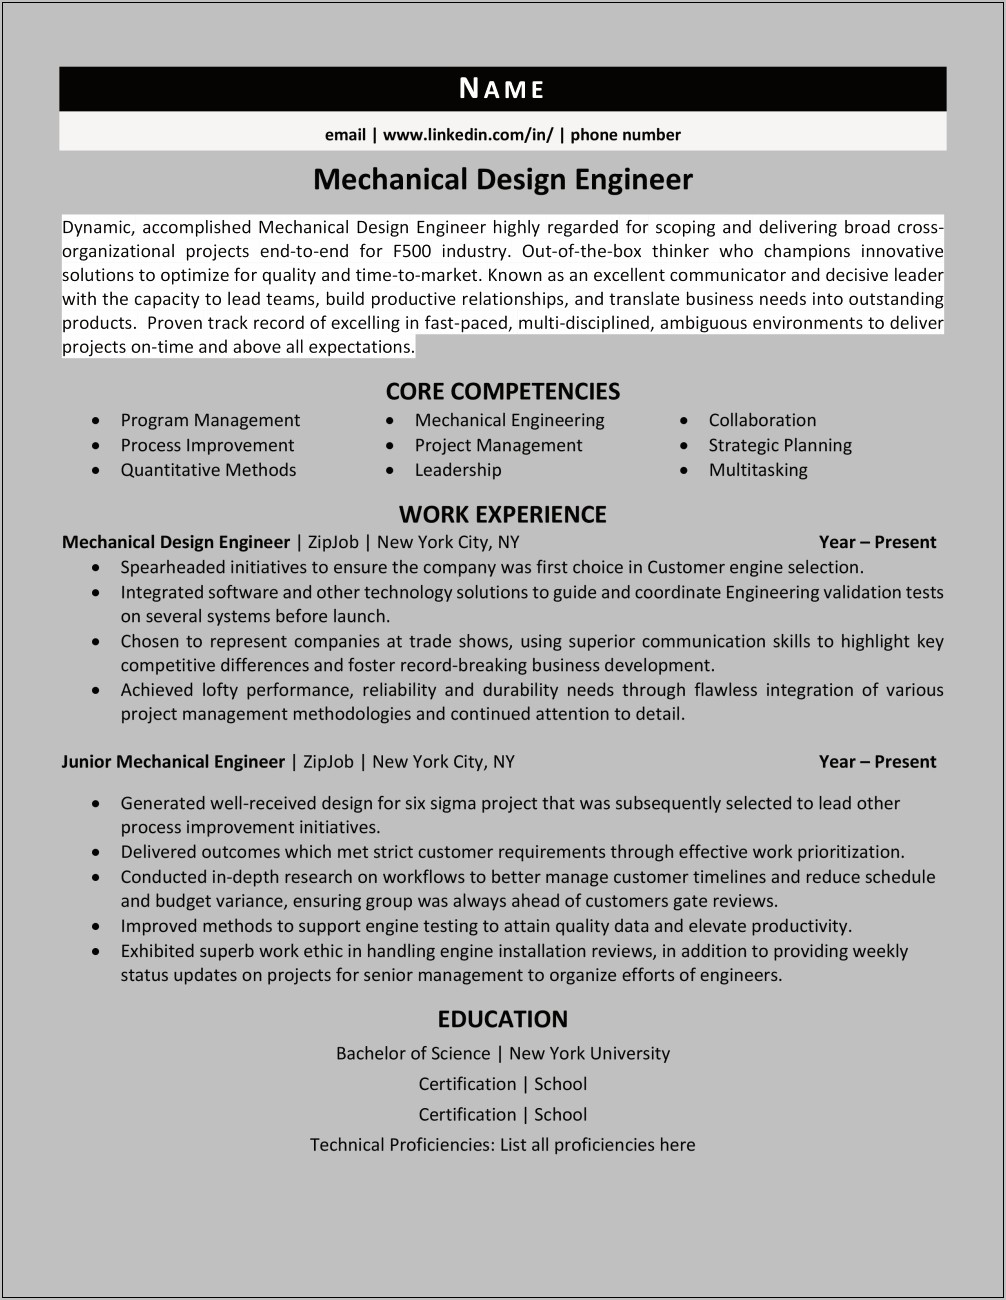 Resume Template For Mechanical Design Engineer